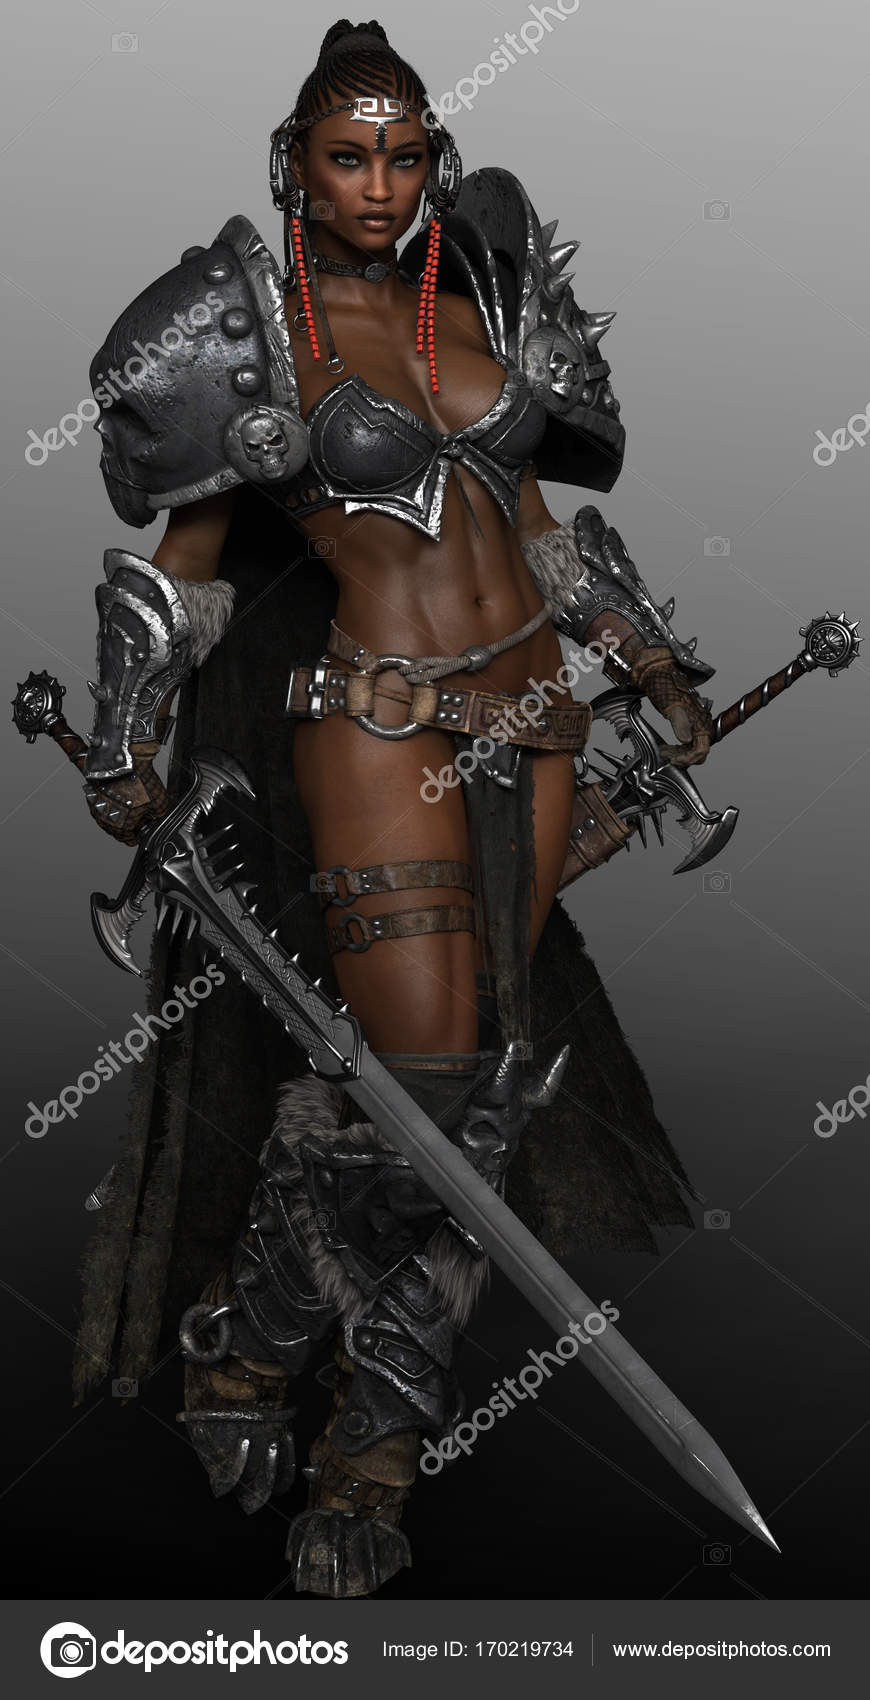 depositphotos_170219734-stock-photo-barbarian-warrior-woman-queen-in.jpg